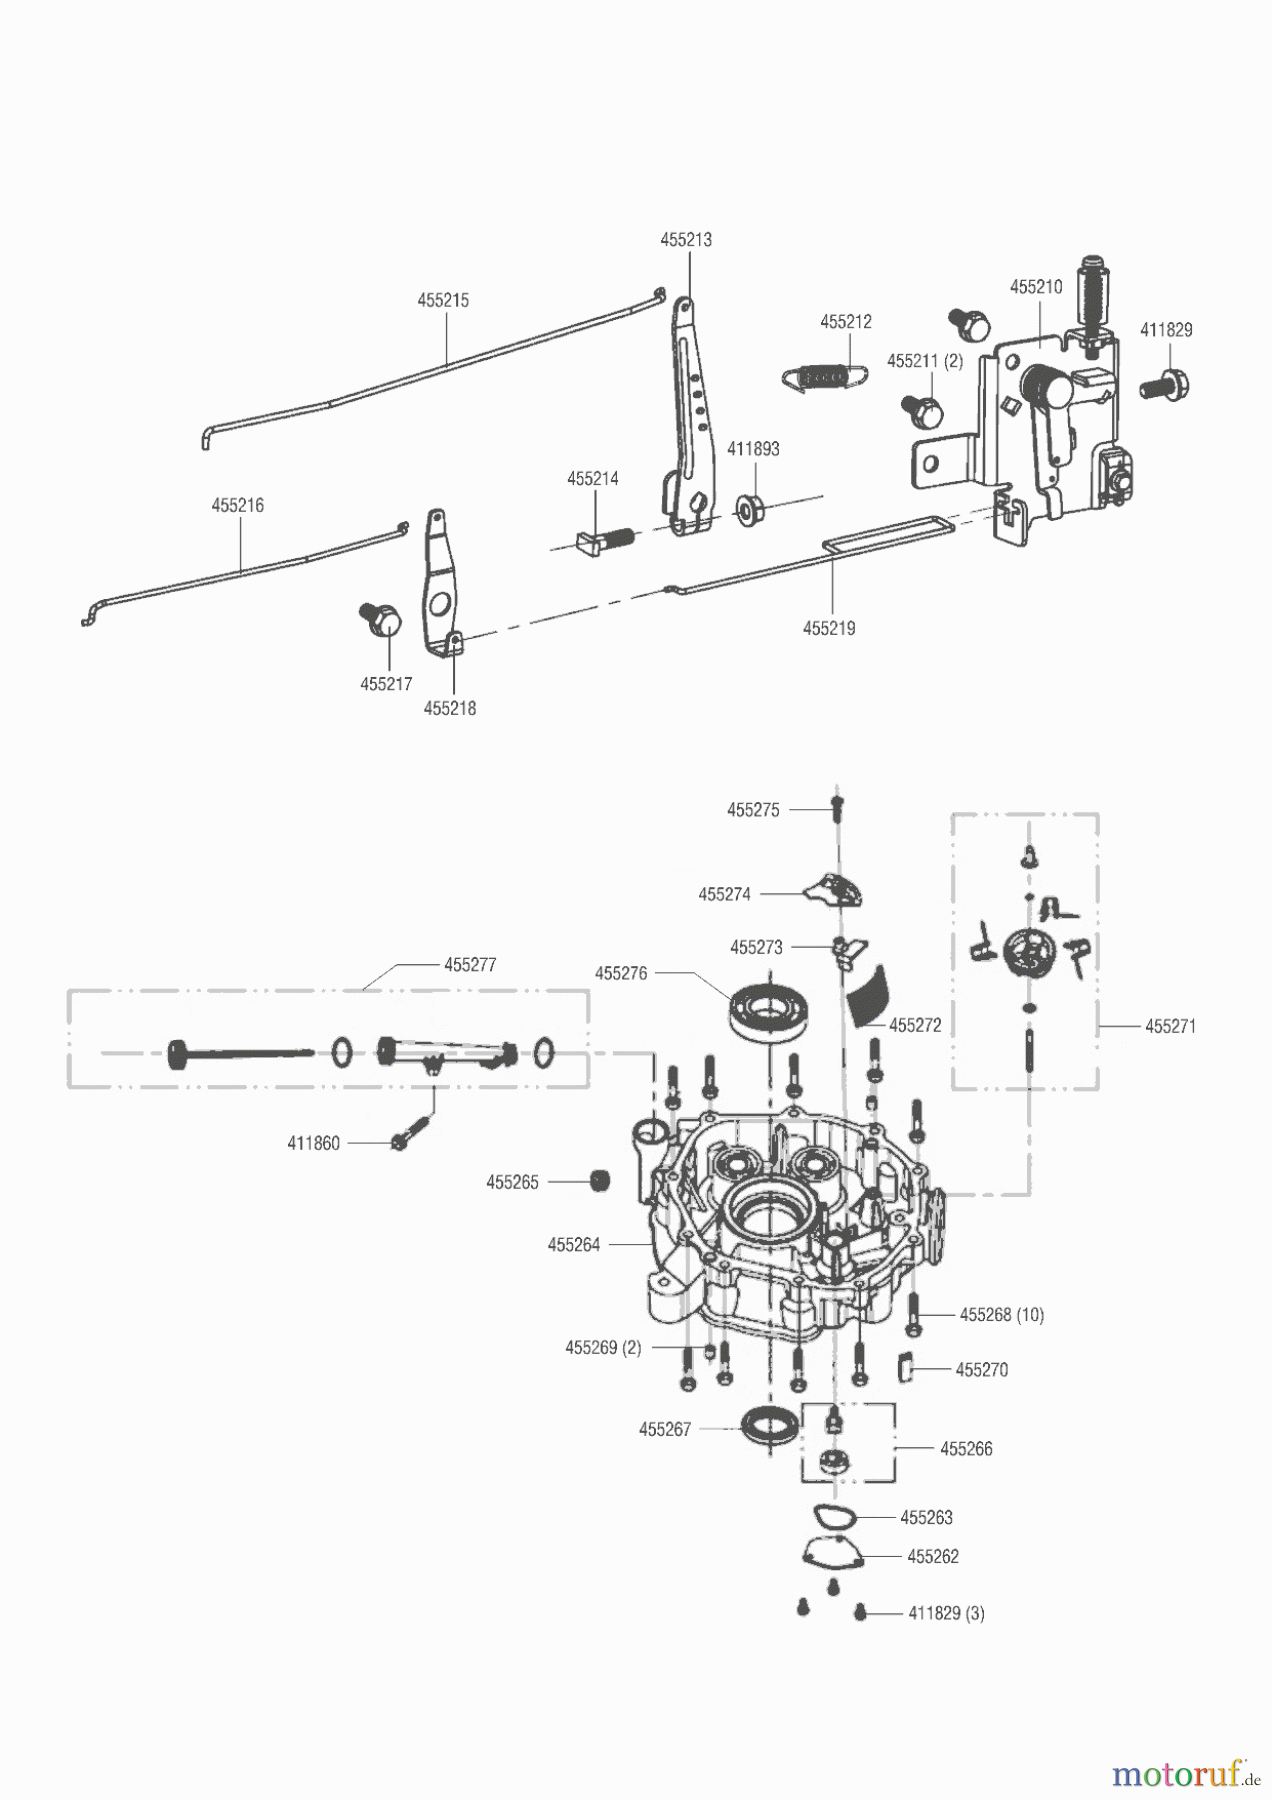  AL-KO Gartentechnik Benzinmotoren B-MOTOR PRO 450 LC1P92F-1 R9005  ab 11/2021 Seite 5